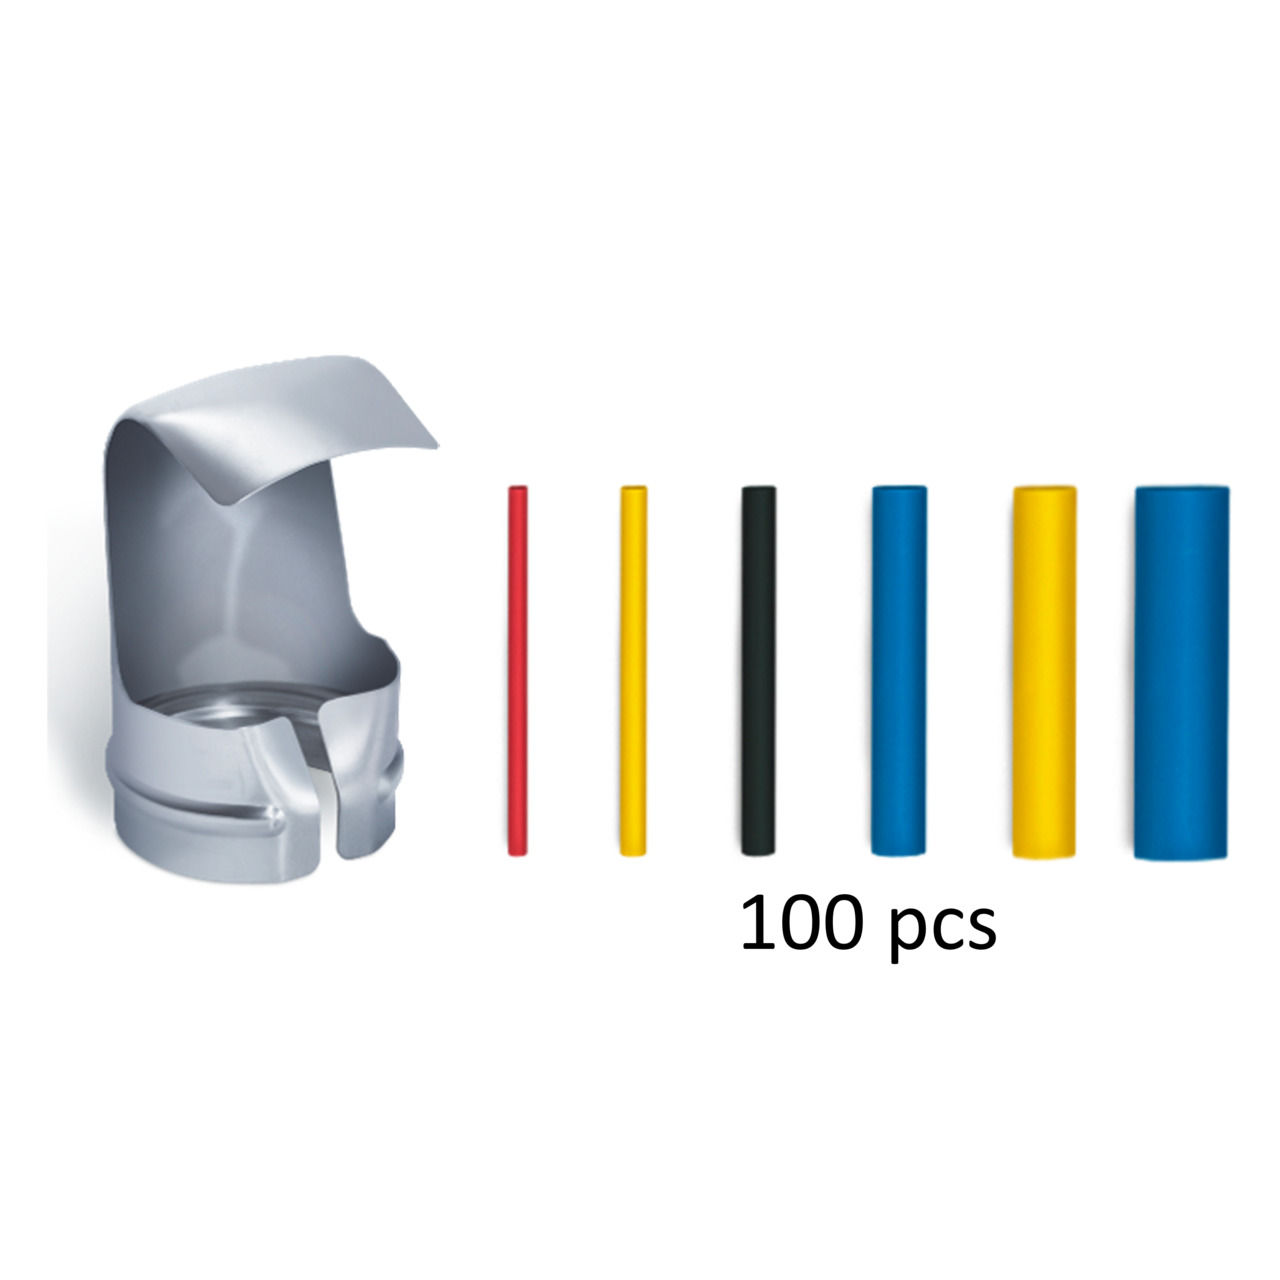 Steinel Shrink Tubing Kit - Heat Shrink 100pcs - German quality